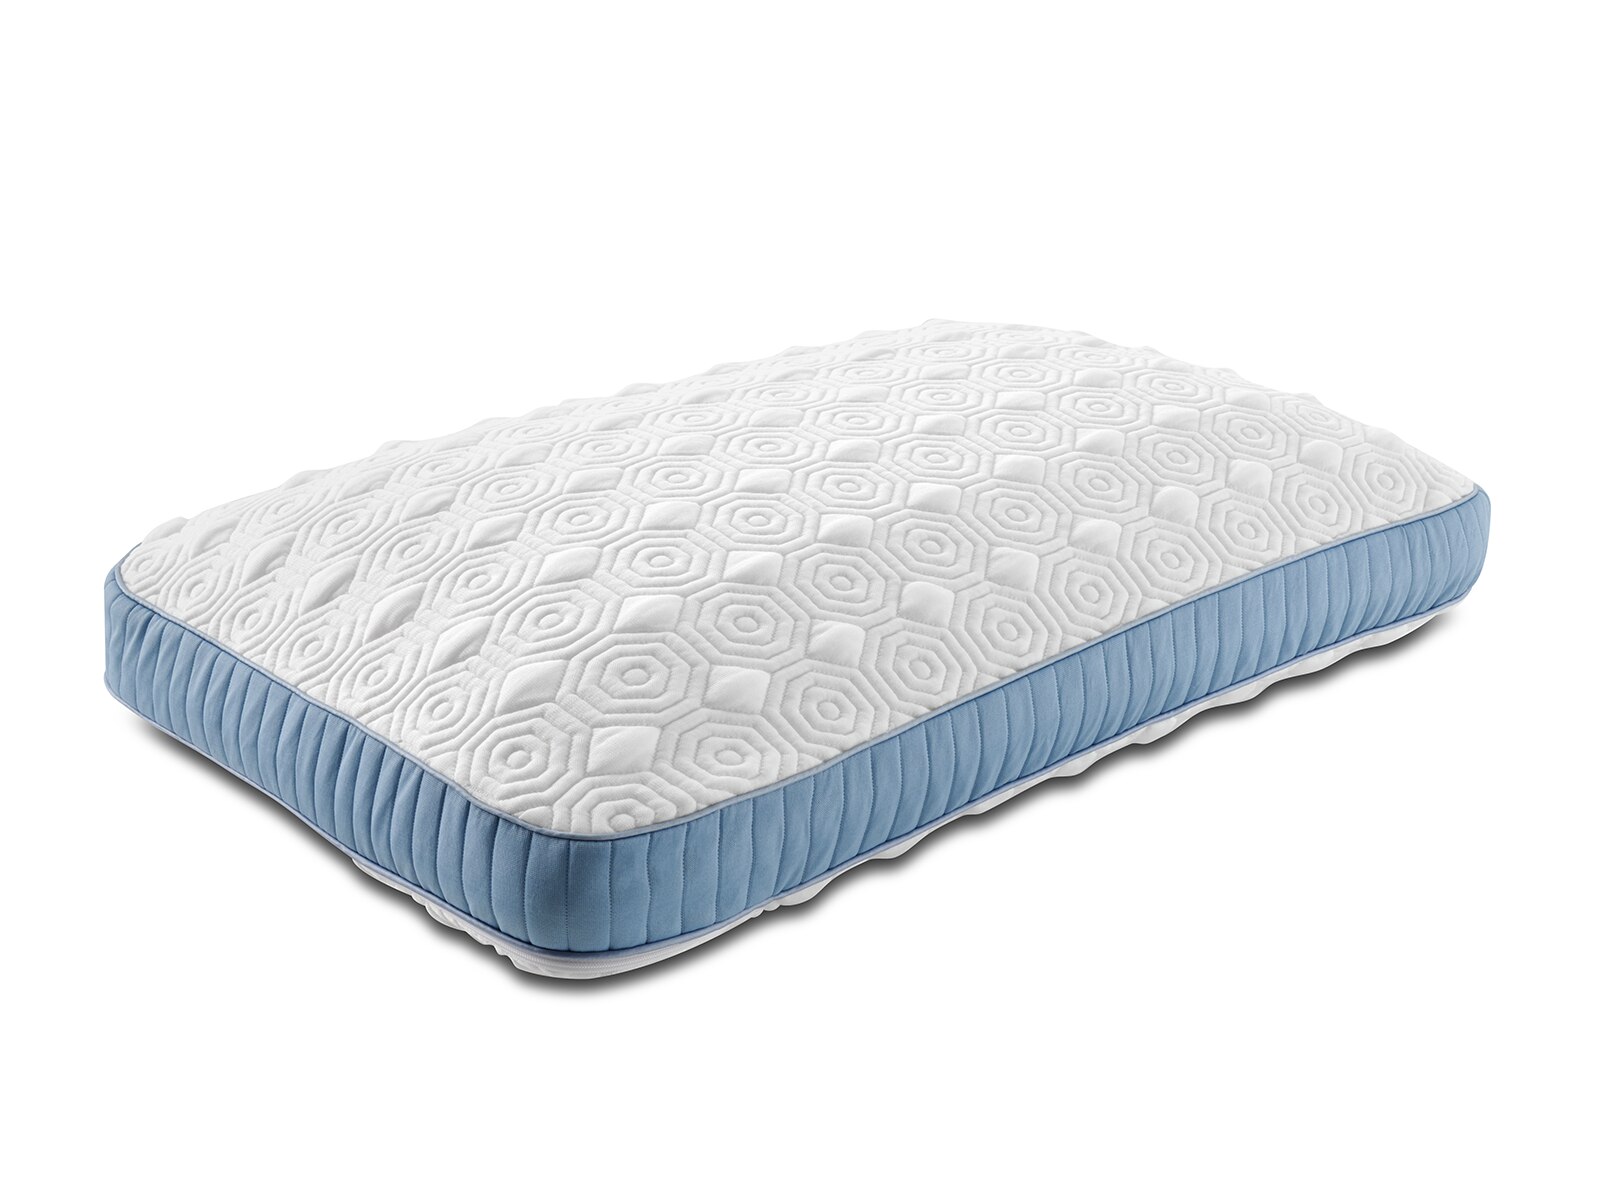 stearns and foster latex foam mattress reviews